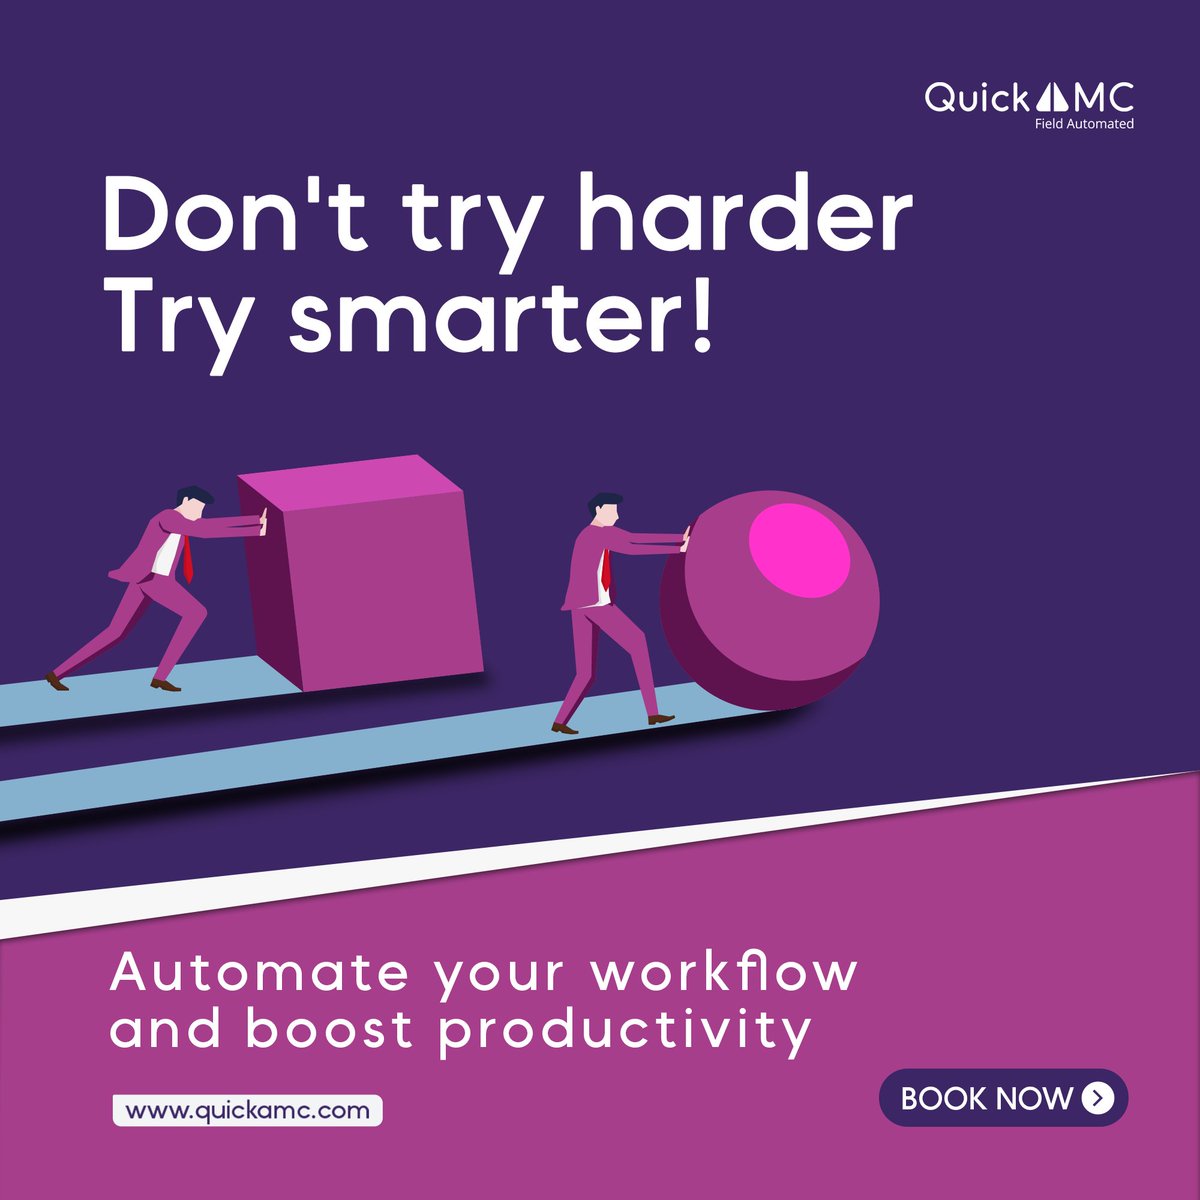 QuickAMC is a software solution designed to automate workflows.

#quickamc #amc #workflows #management #streamline #technology #tech #business #automate #software #iot #fieldservicenews #ebook #fieldautomation #work #fieldserviceengineer #marketing